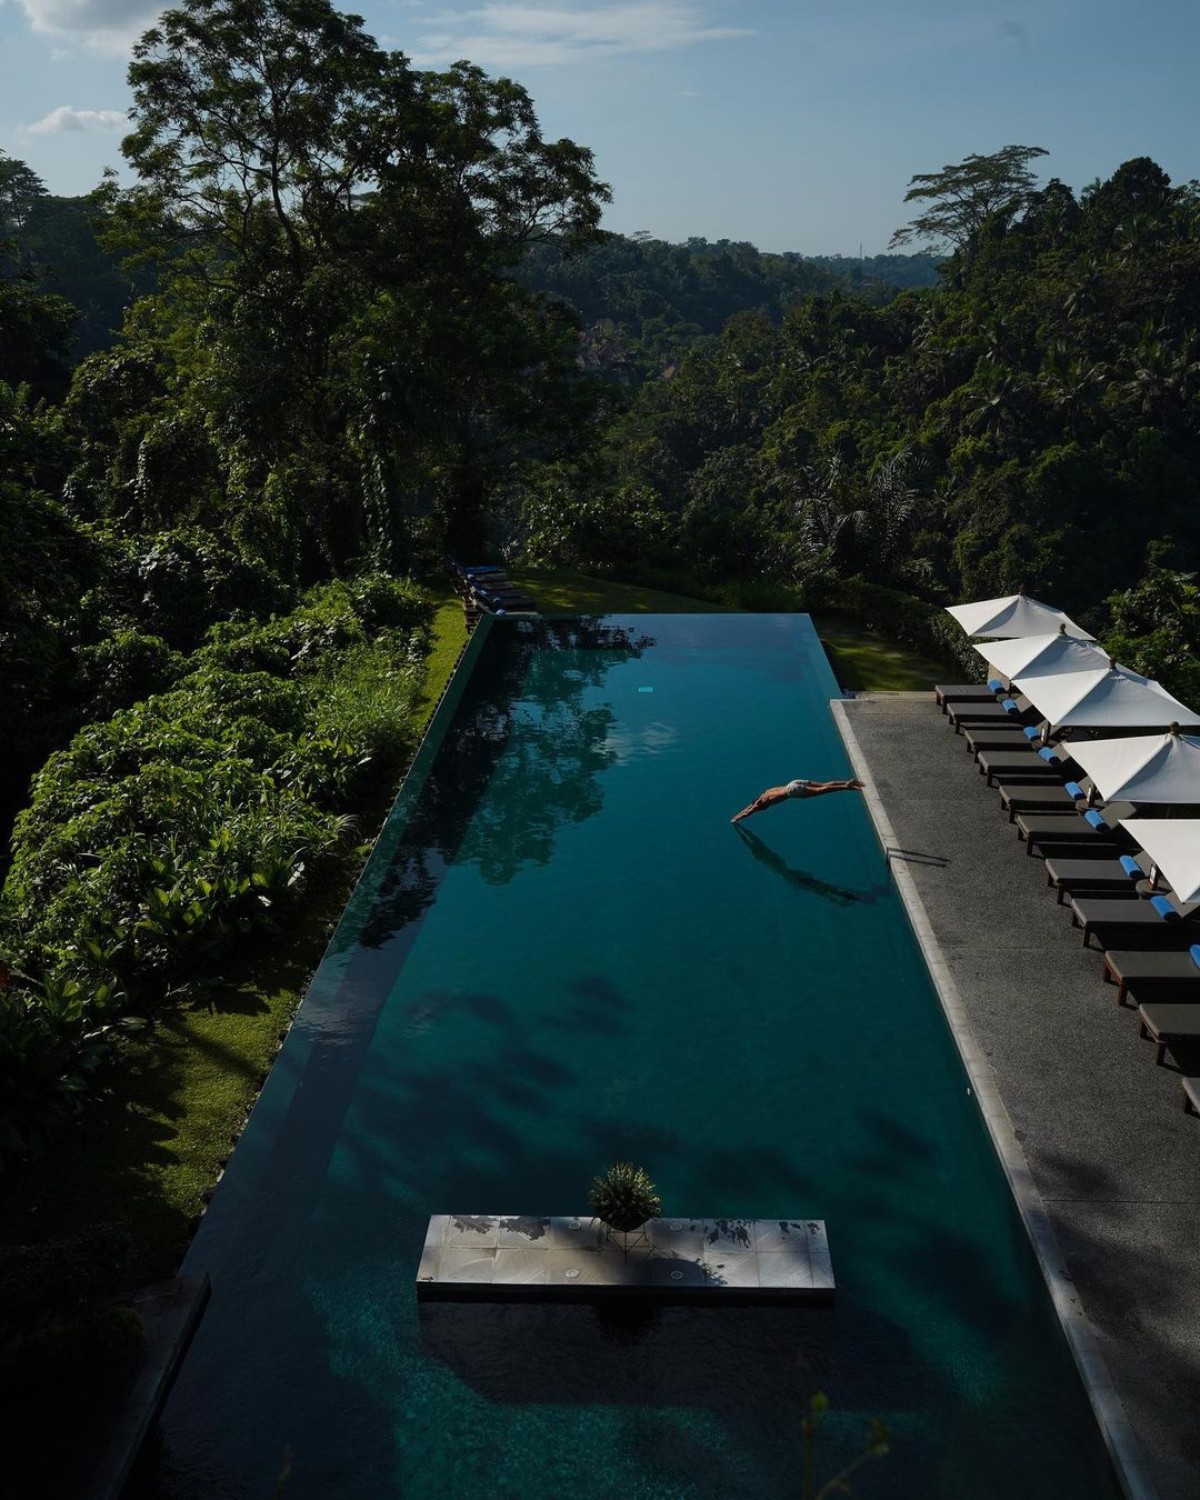 Infinity pool overlooking dense forest in Ubud, Bali.